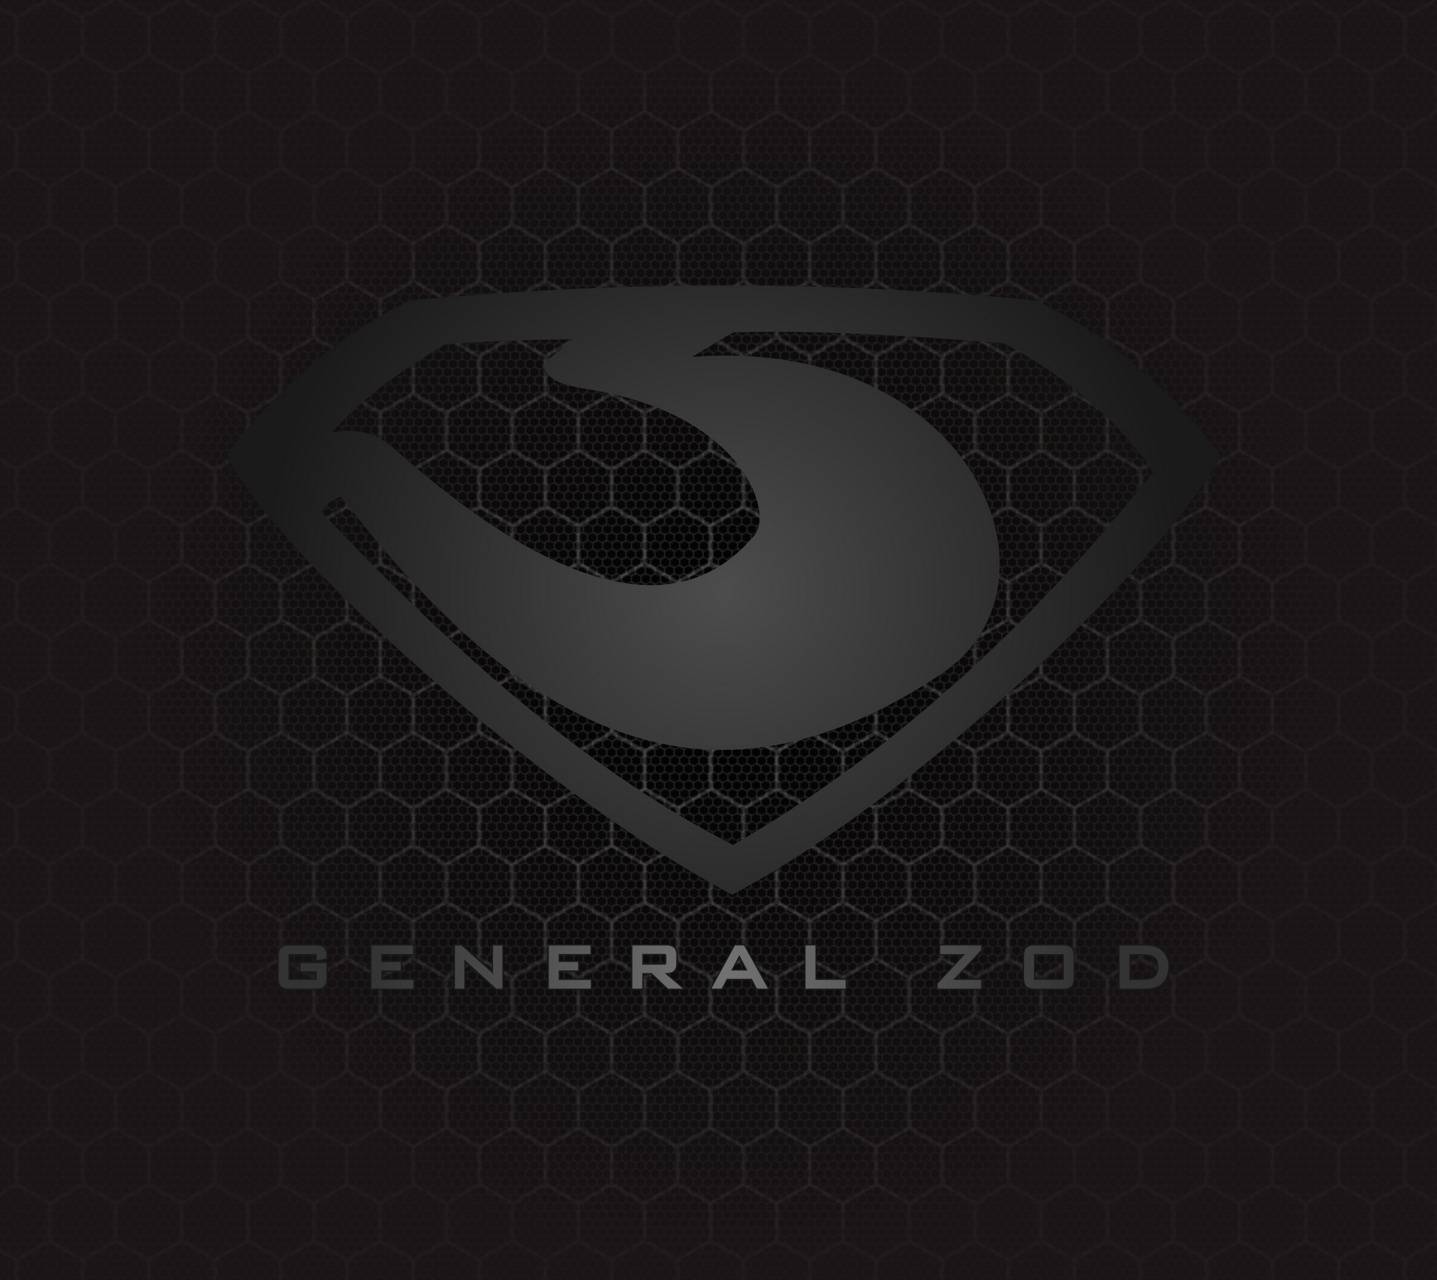 general zod logo wallpaper